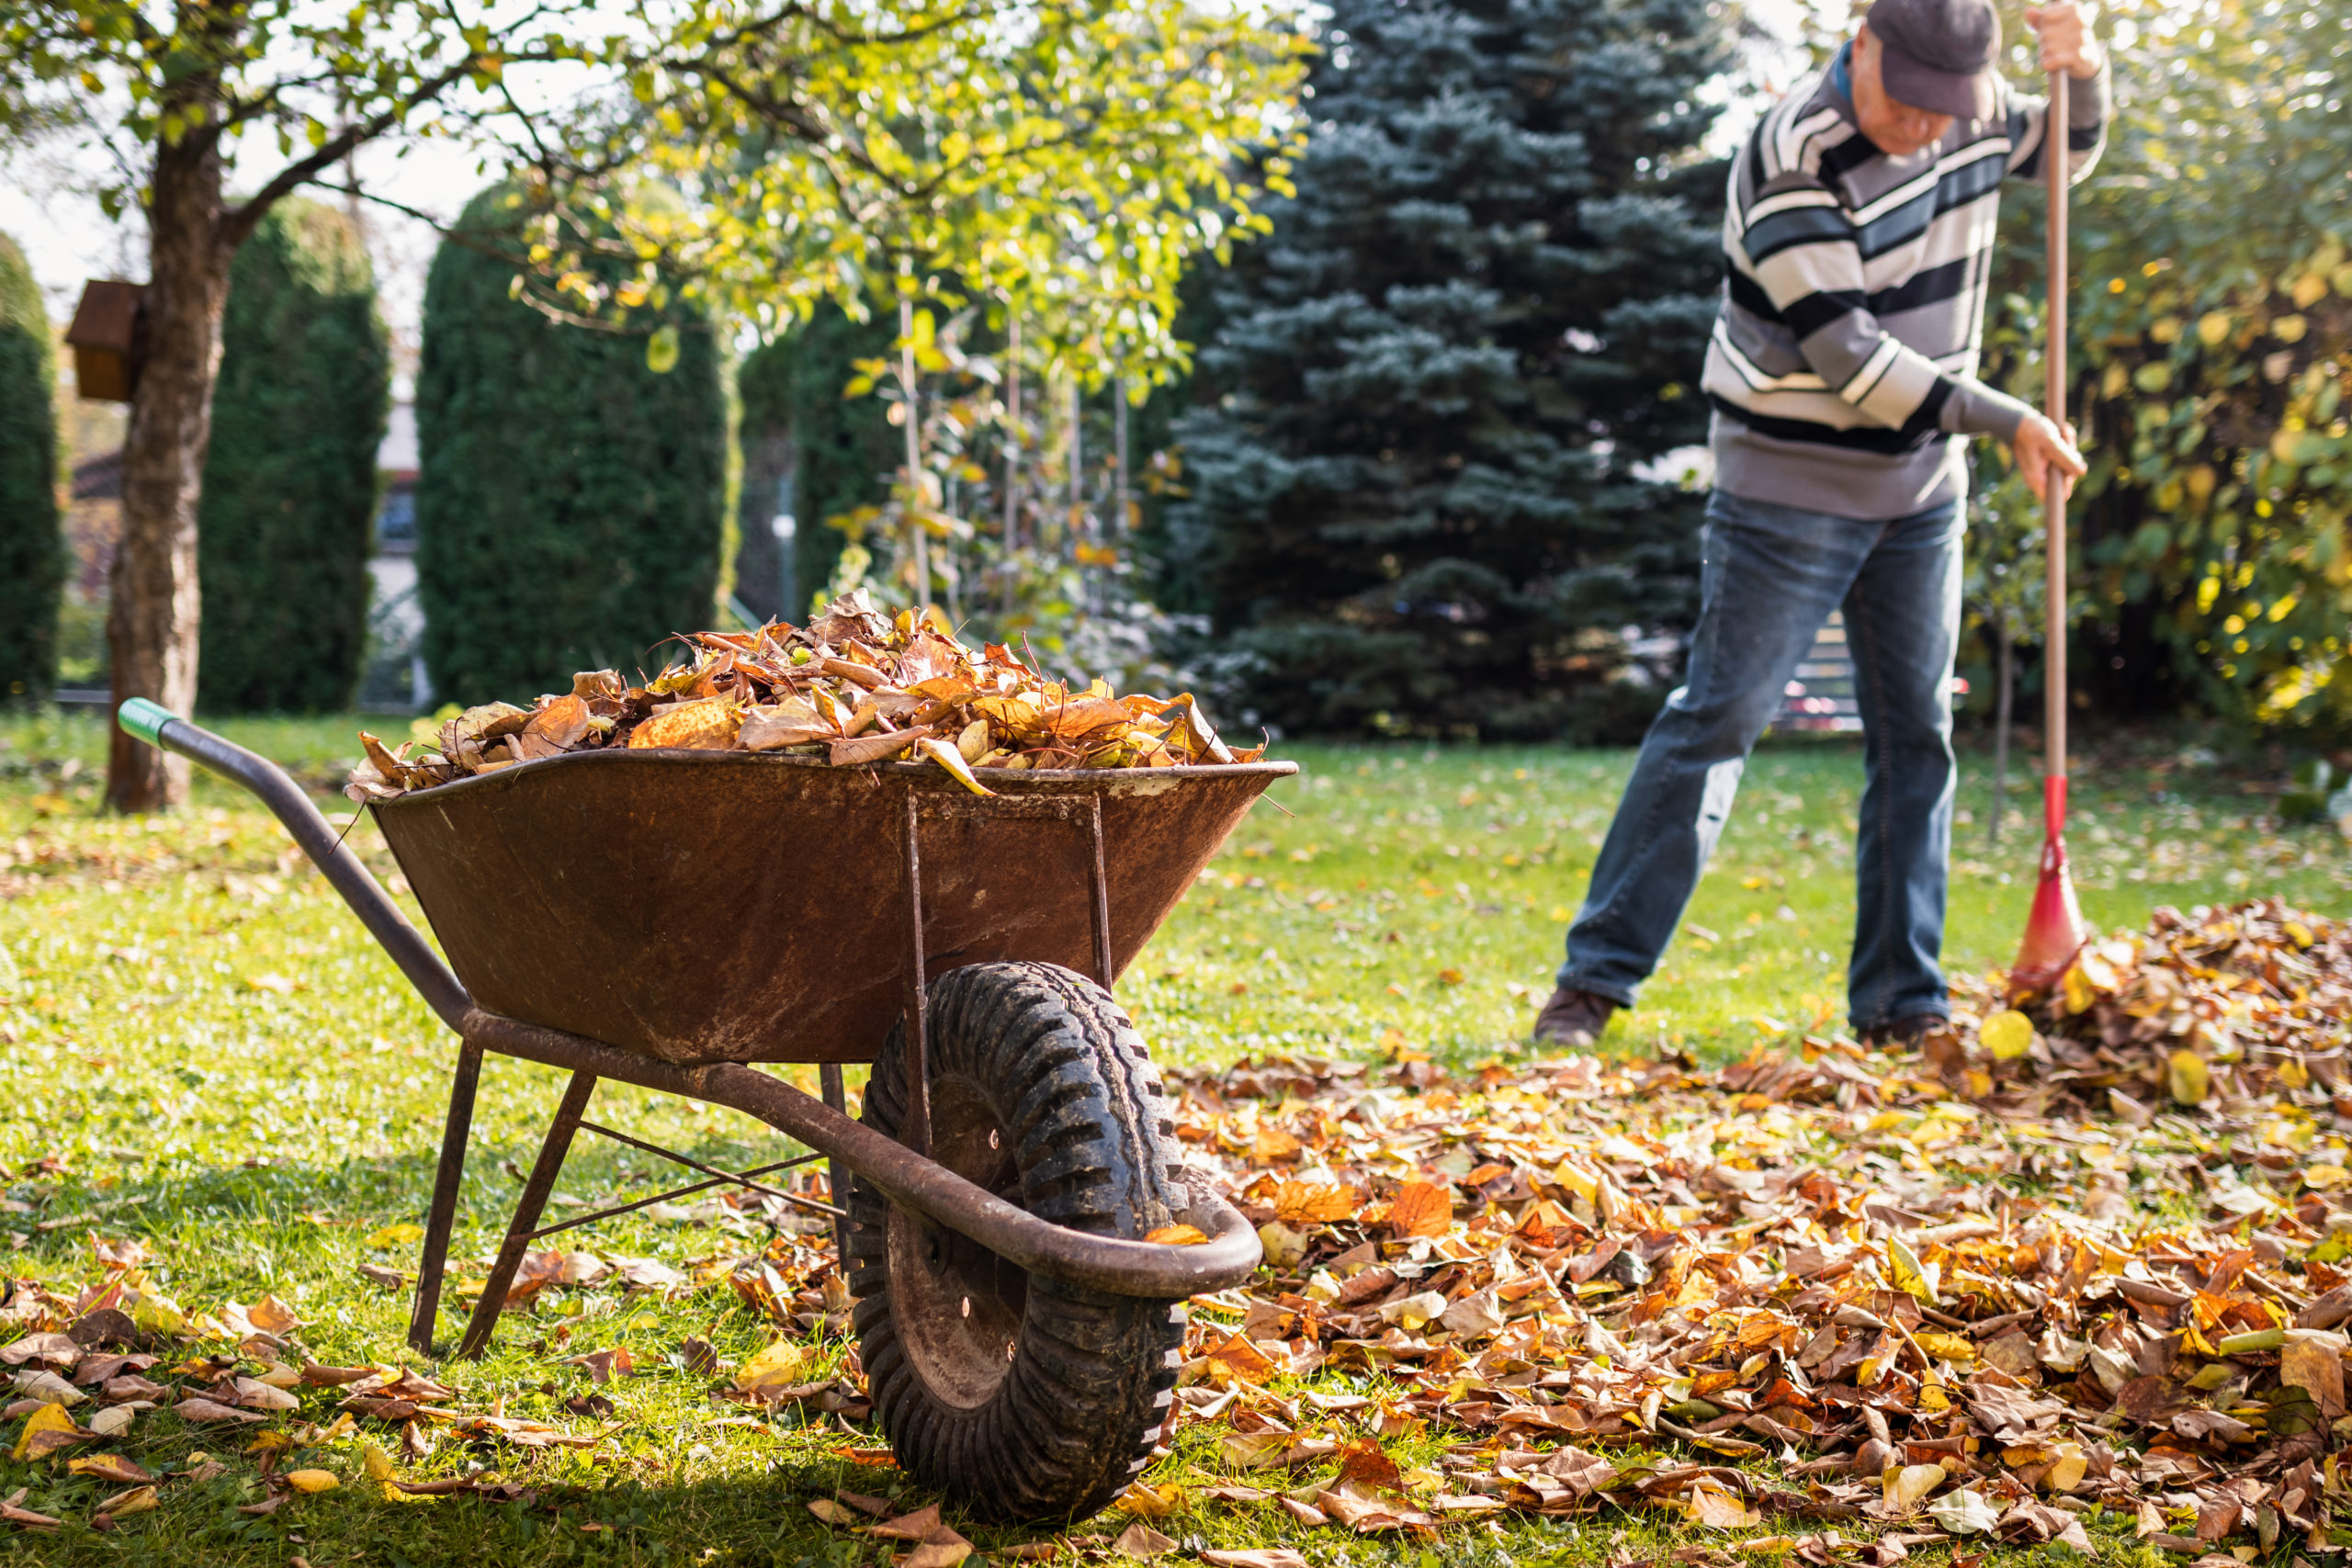 Older man raking leaves in his yard behind a wheelbarrow full of fall foliage.